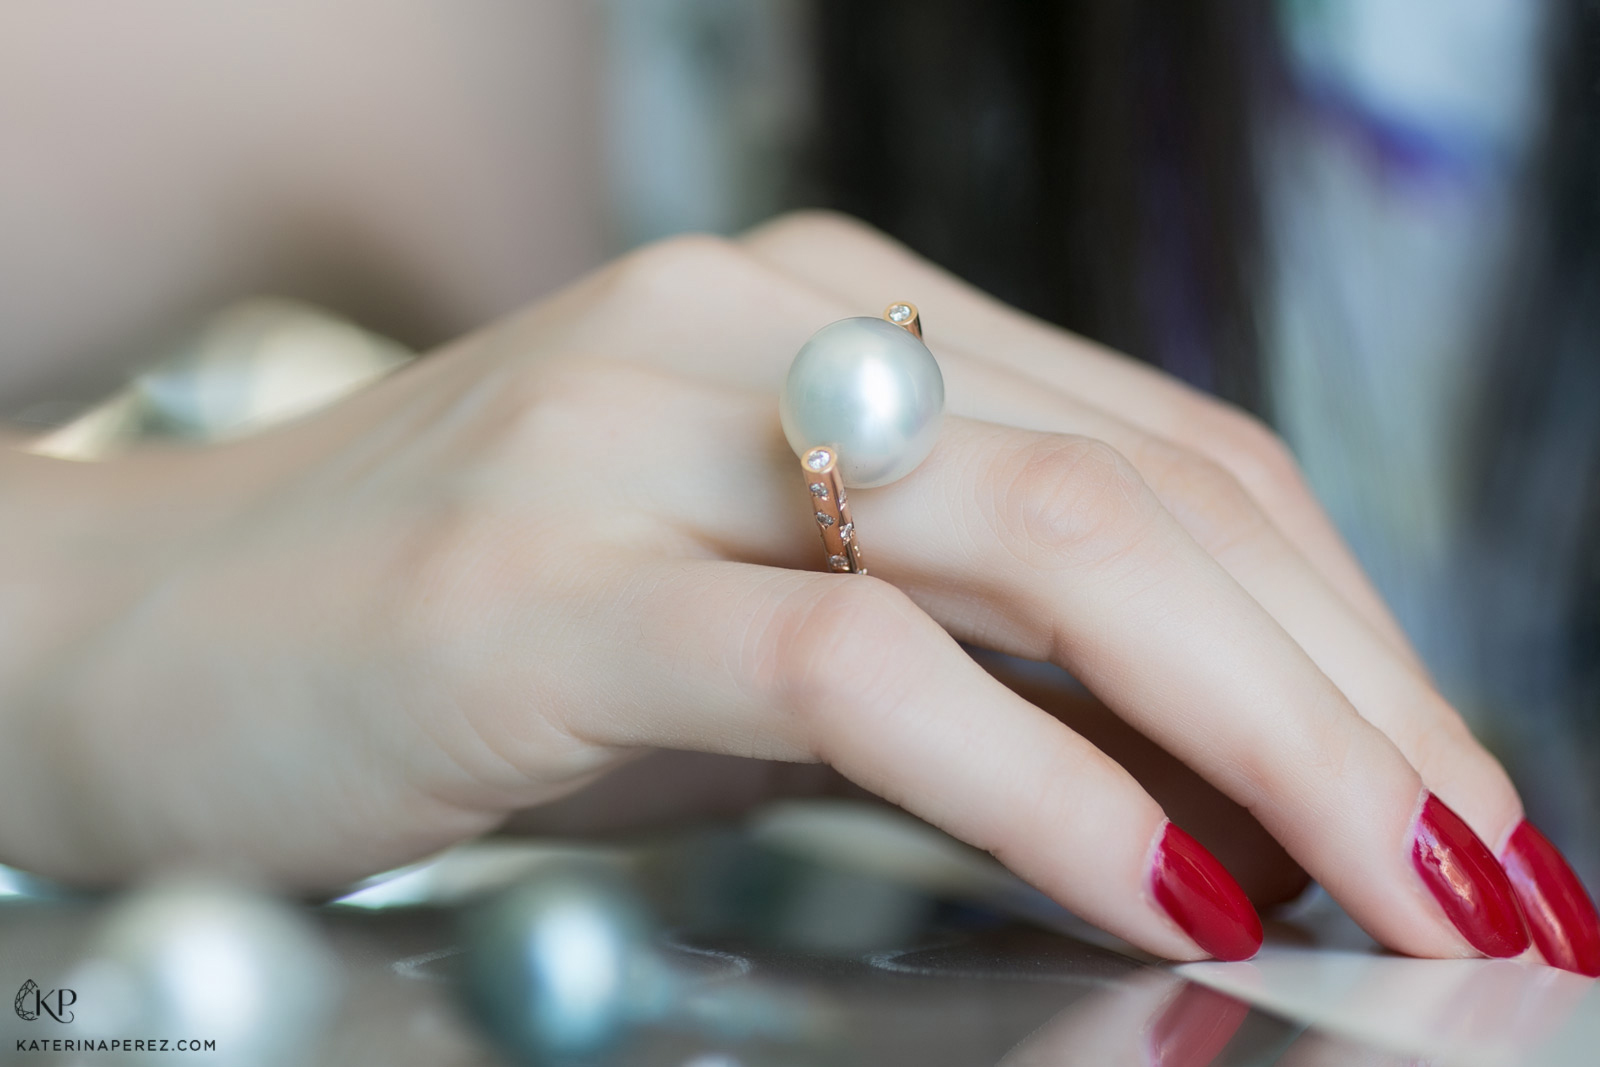 Julie Genet's beautiful white Australian pearl Planete ring